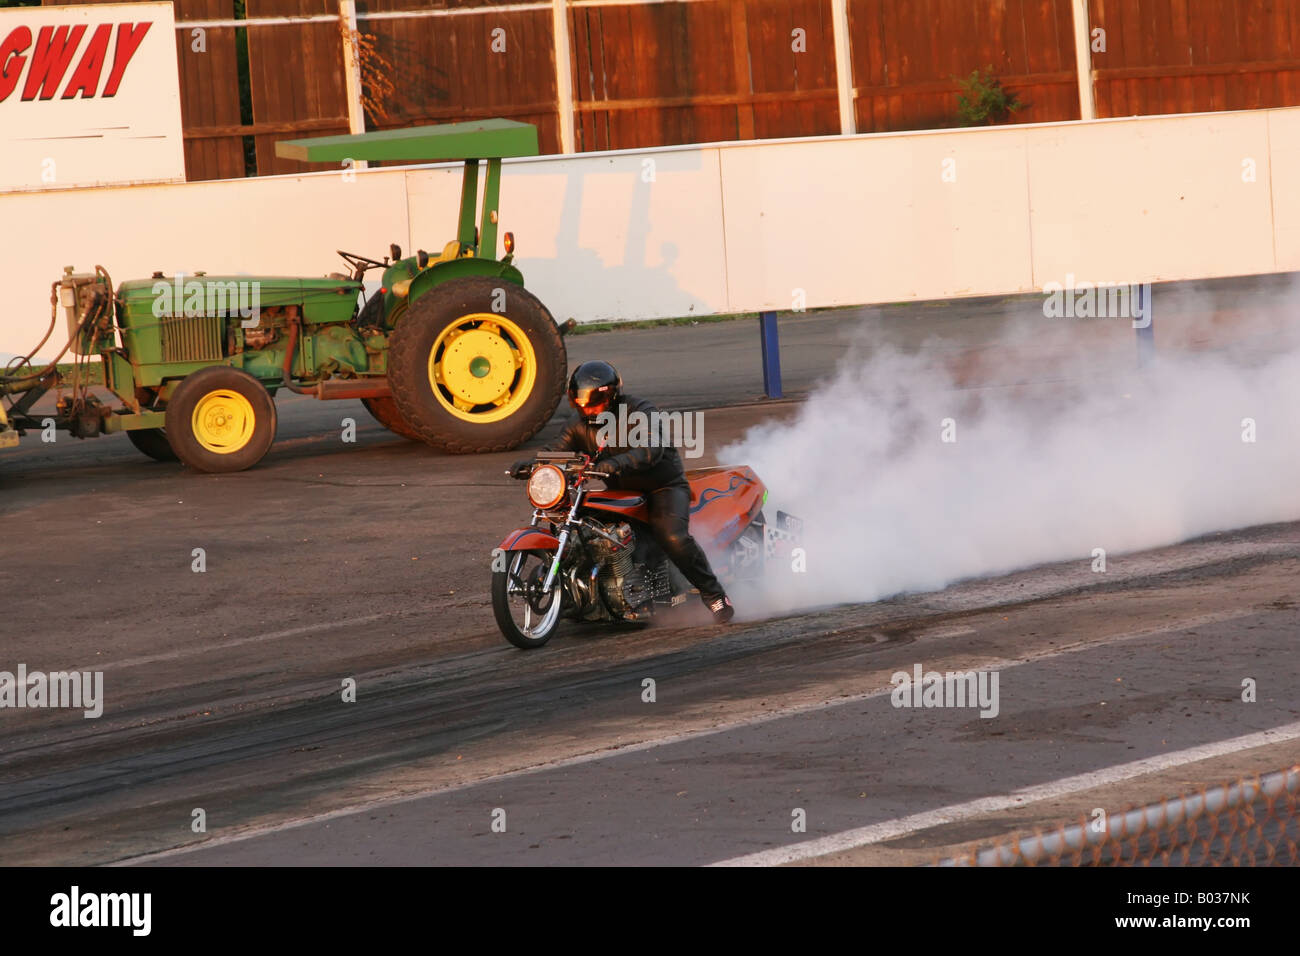 Tire Warmup Burnout Drag Race Motorcycle at Kil Kare Dragway Xenia or Dayton Ohio Stock Photo